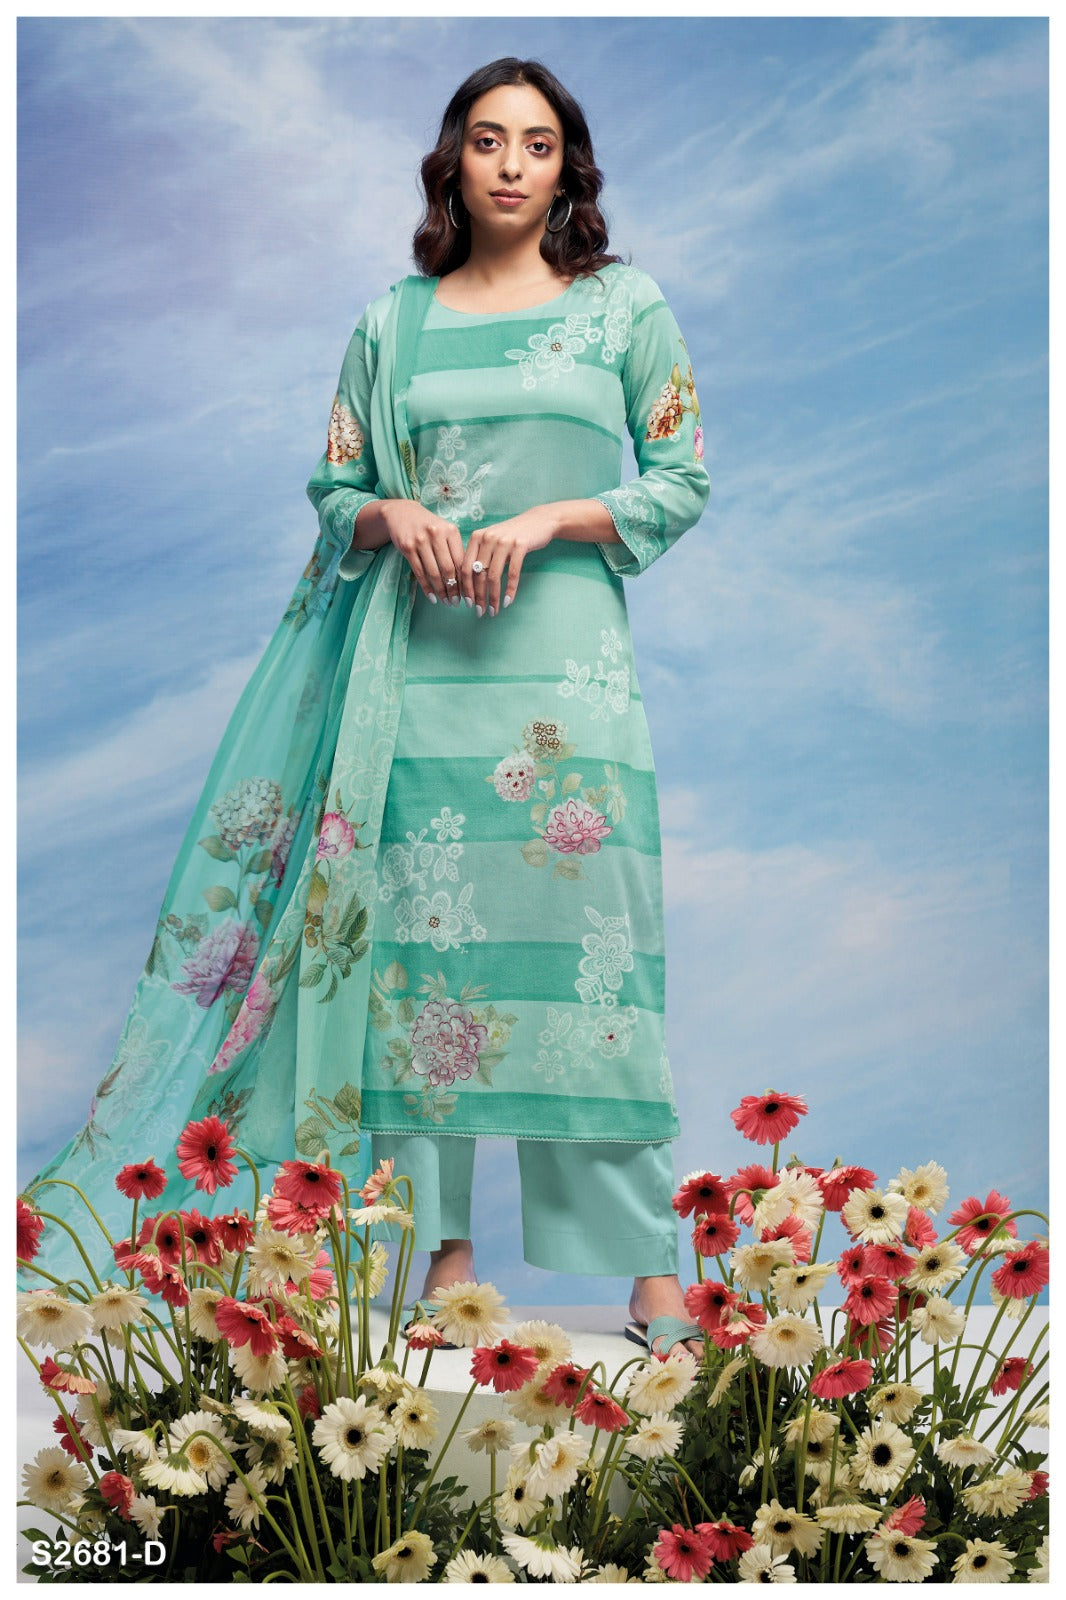 Arna 2681 Ganga Premium Cotton Plazzo Style Suits Exporter Gujarat